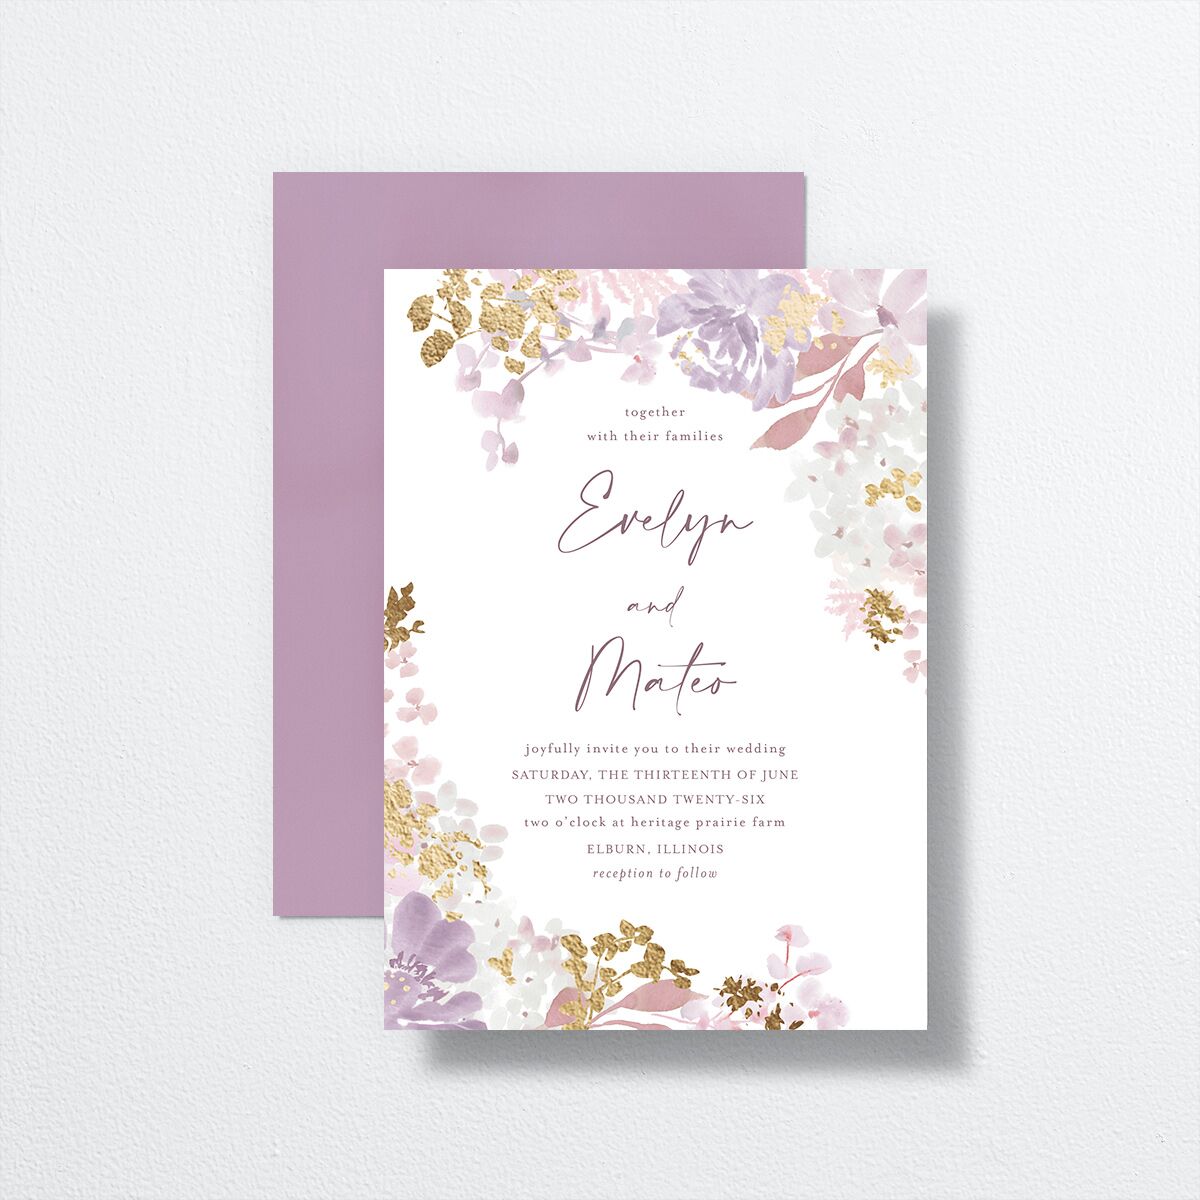 Hydrangea Garden Wedding Invitations front-and-back in purple